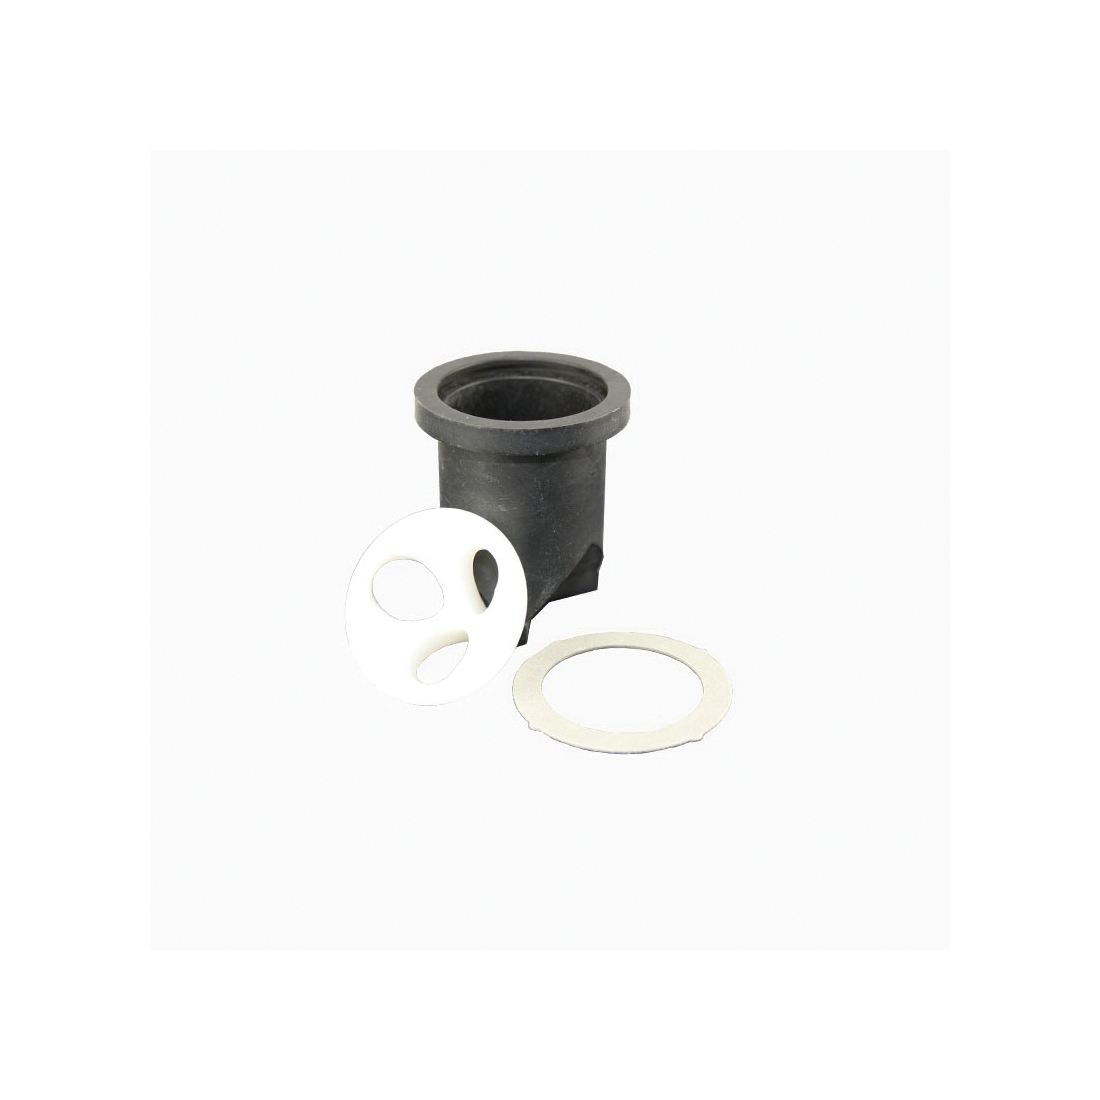 Sloan® 3323192 V-551-A Vacuum Breaker Repair Kit, For Use With Sloan® Flushometer/Urinal Valve/Royal/Regal® Flushometer and Regal® Closet, Rubber, Black, Domestic